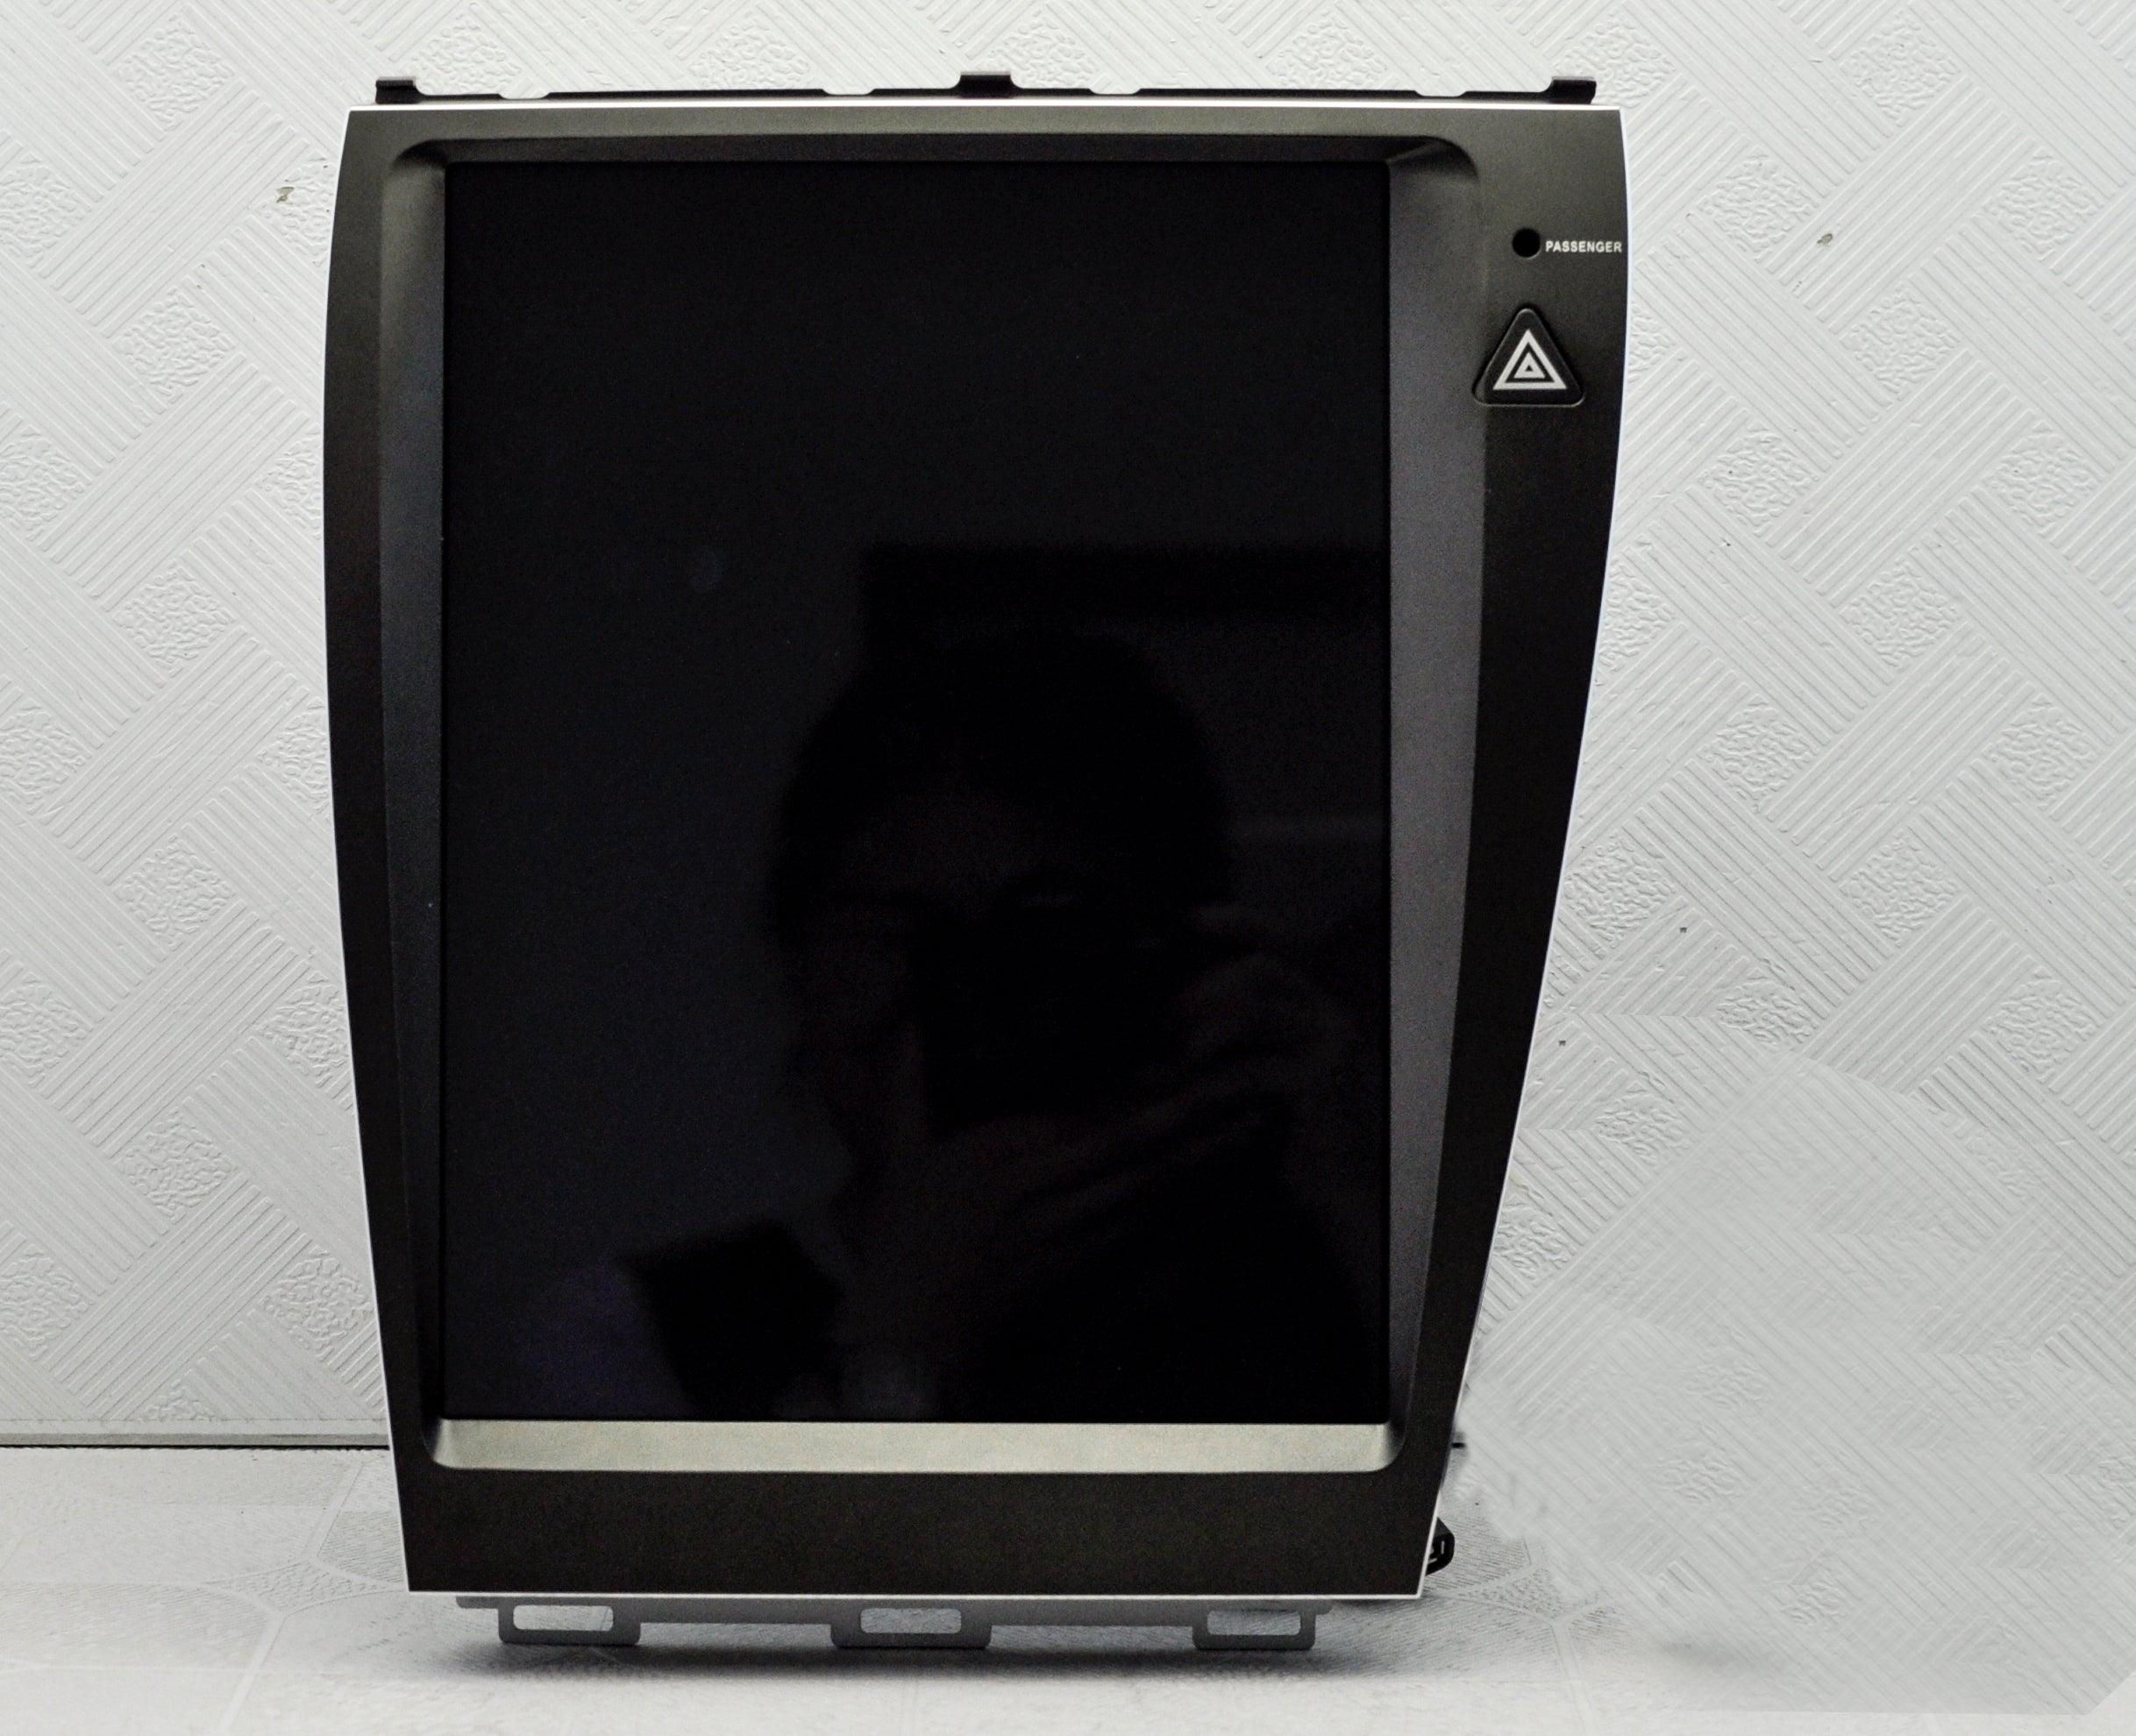 [Open Box] Lexus ES 2007-2012 12.1" Vertical Screen Android Radio with Aluminum Alloy Bezel Tesla Style